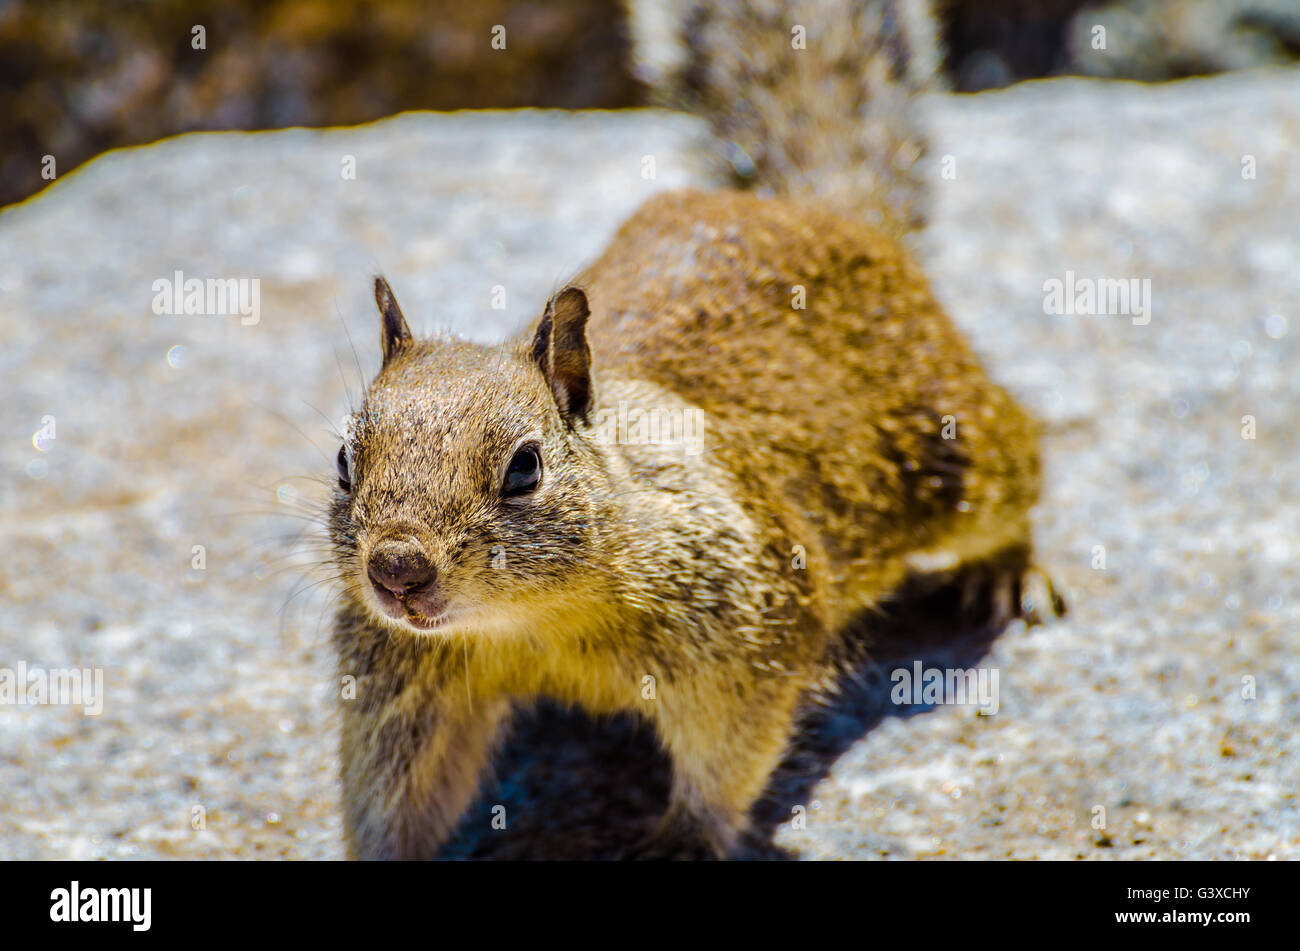 Original Portraits or a squirrel in Yosemite National Park, USA Stock Photo